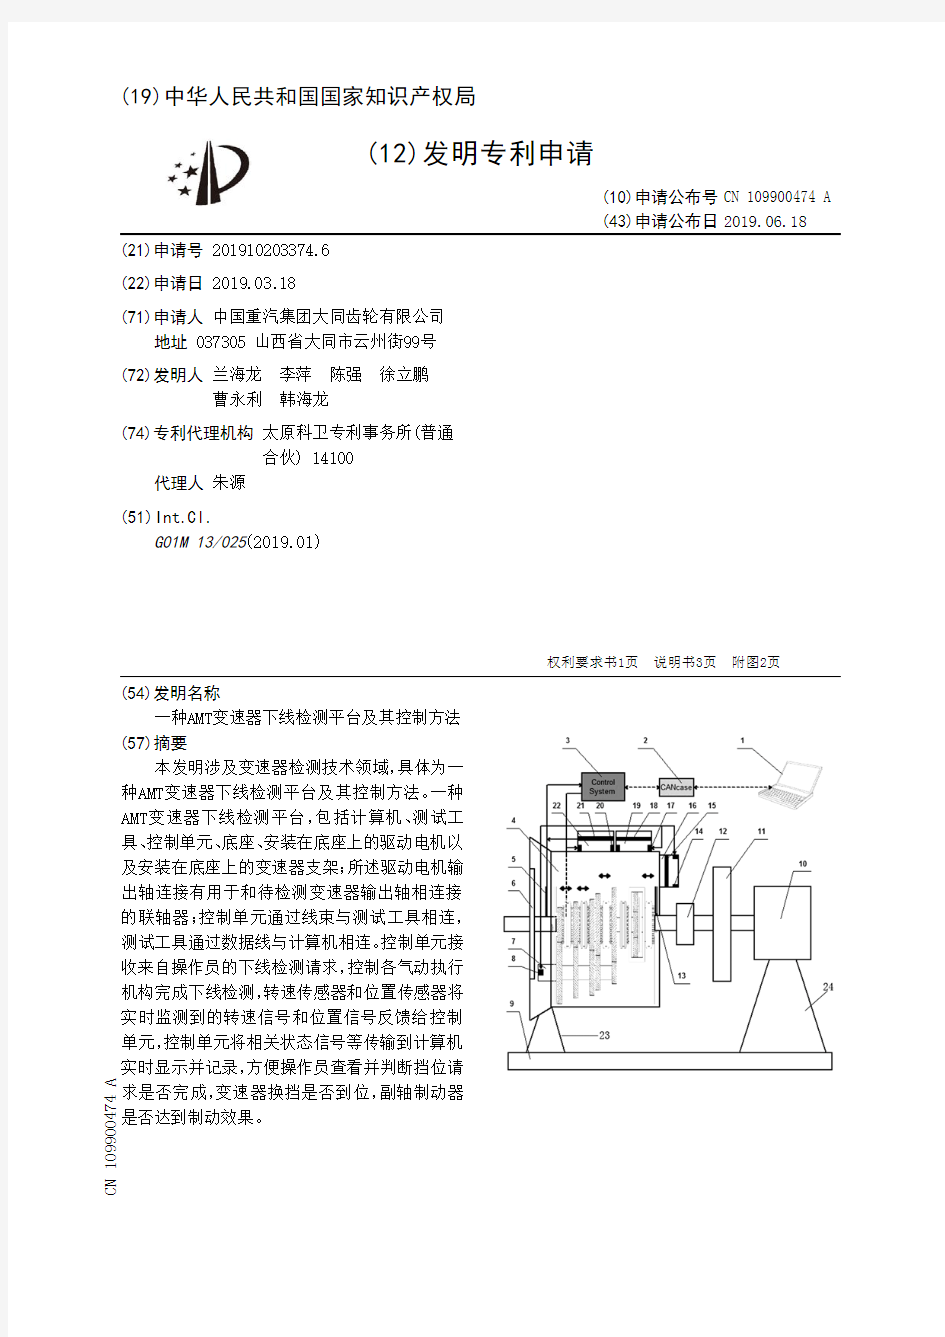 【CN109900474A】一种AMT变速器下线检测平台及其控制方法【专利】